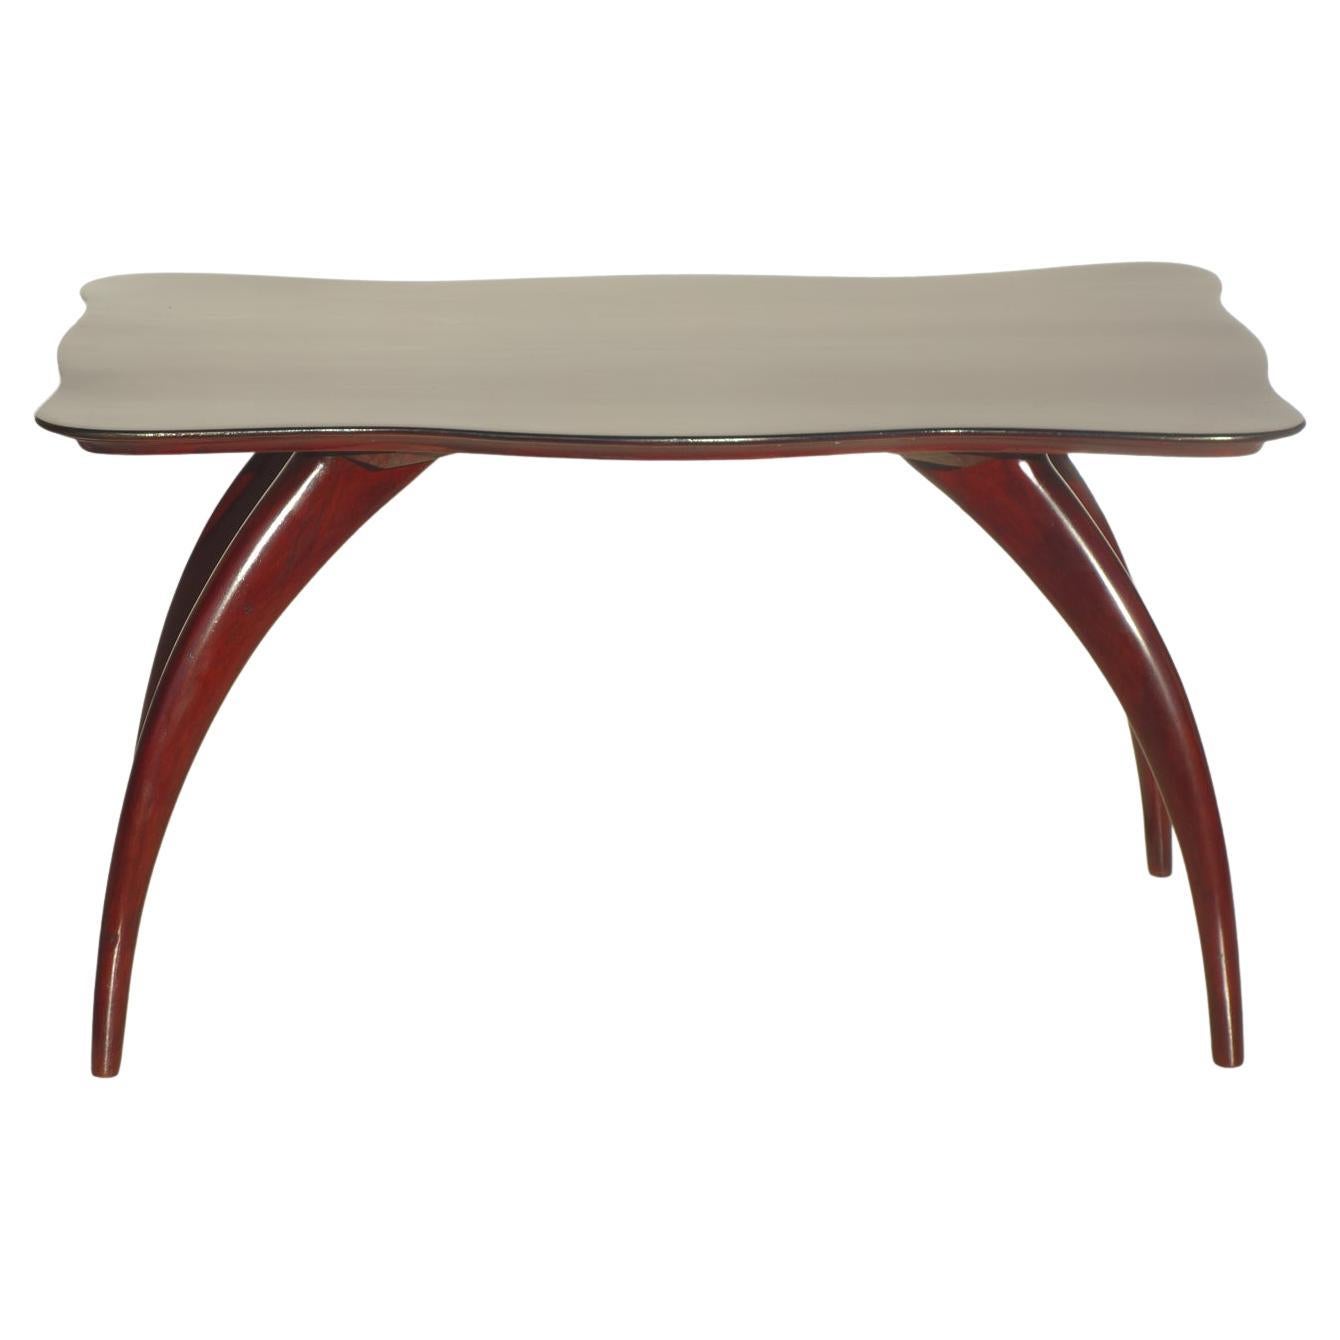 19330 Guglielmo Ulrich Italian Art Deco Design Wood Coffee Table For Sale